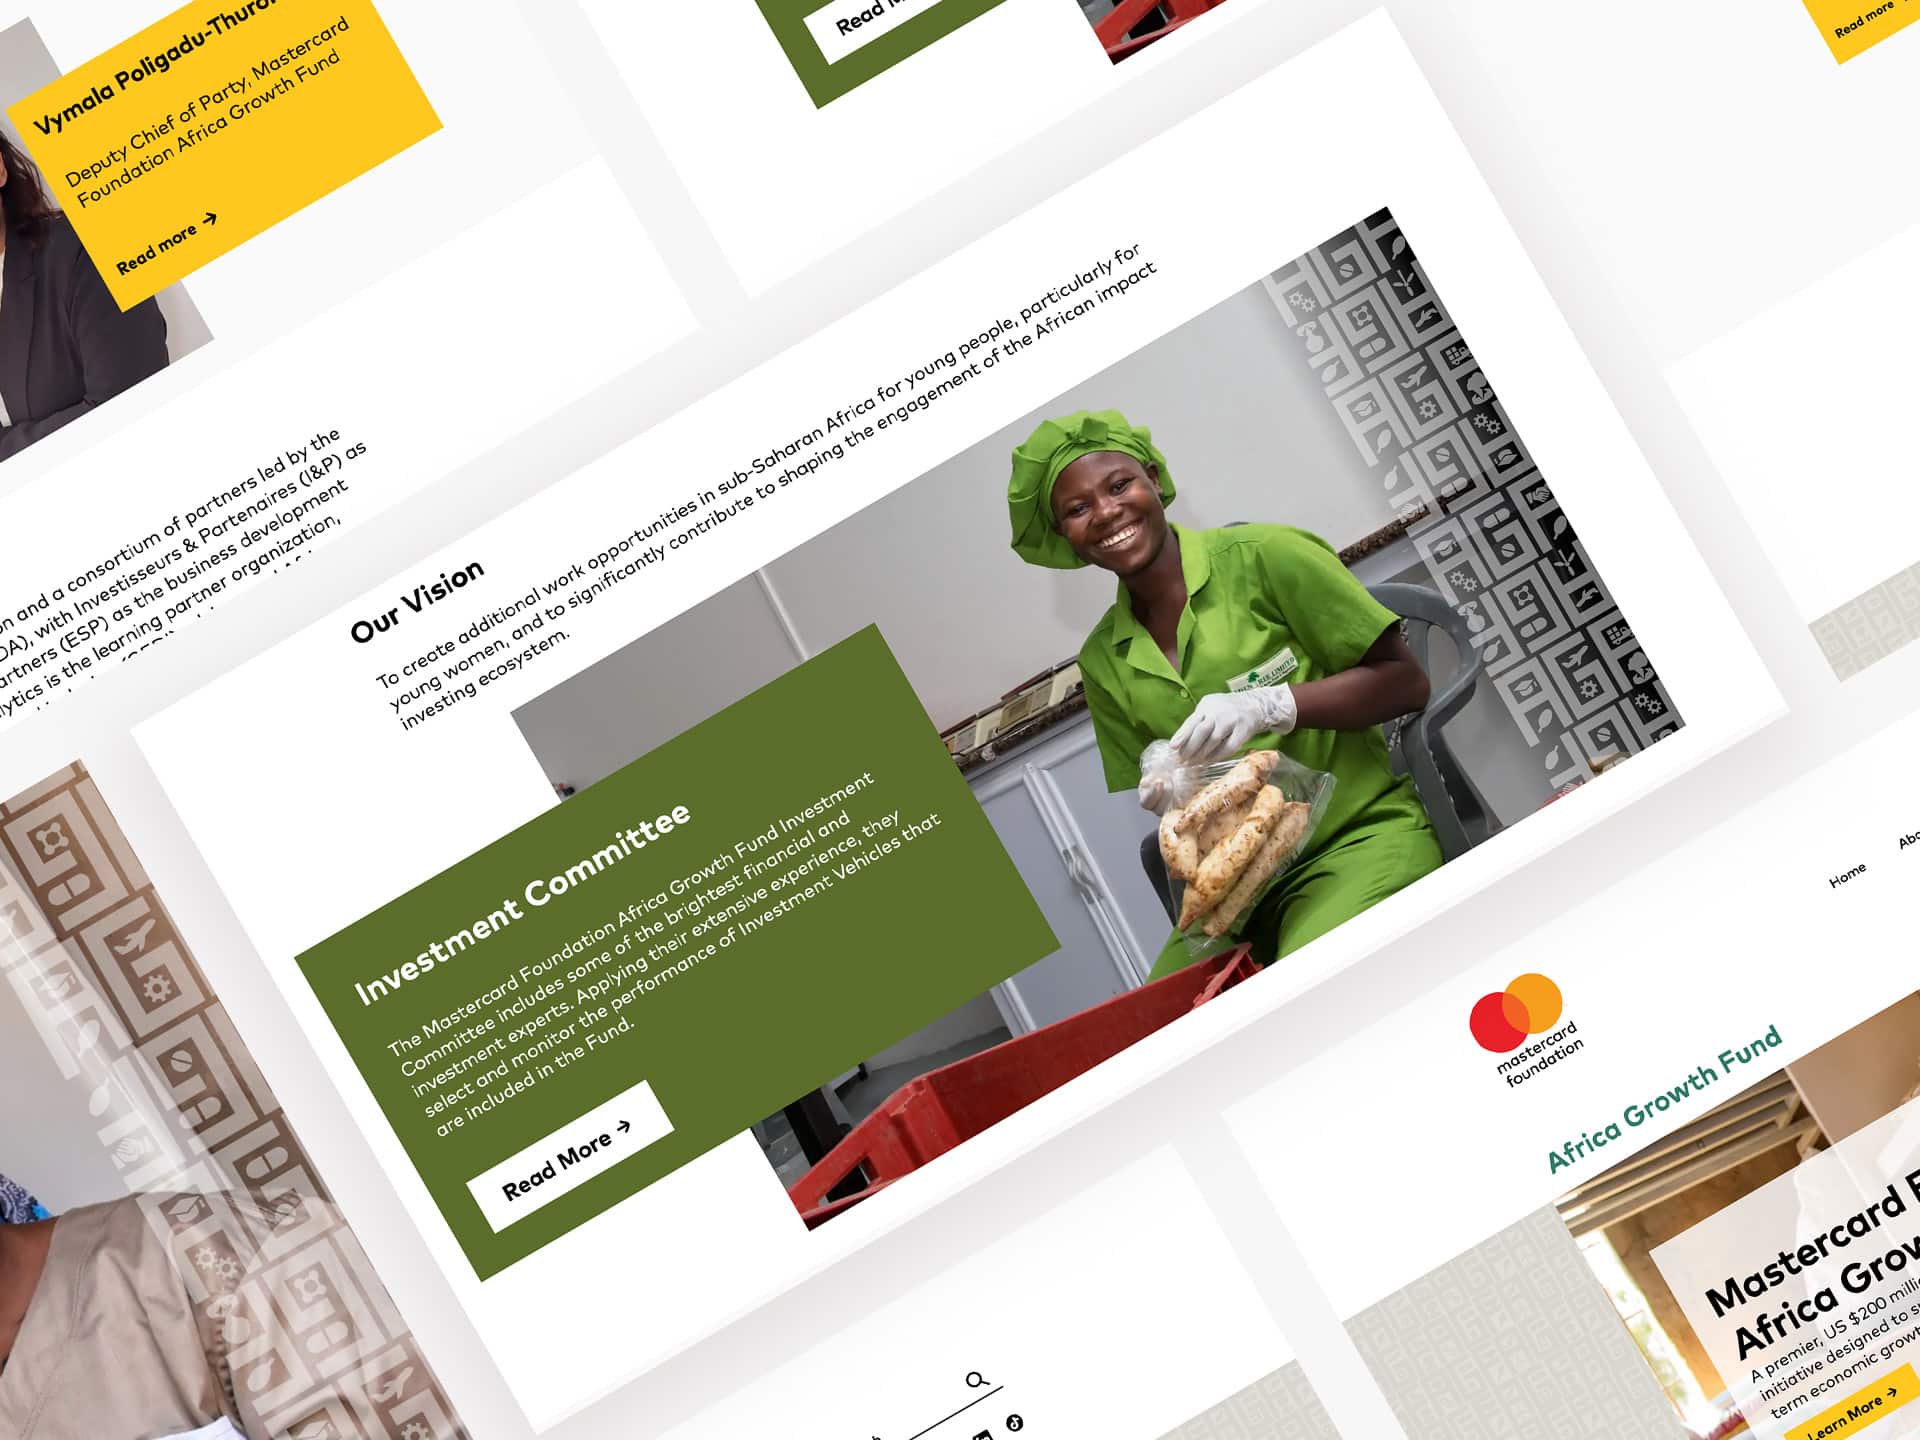 Mastercard Foundation Africa Growth Fund Website